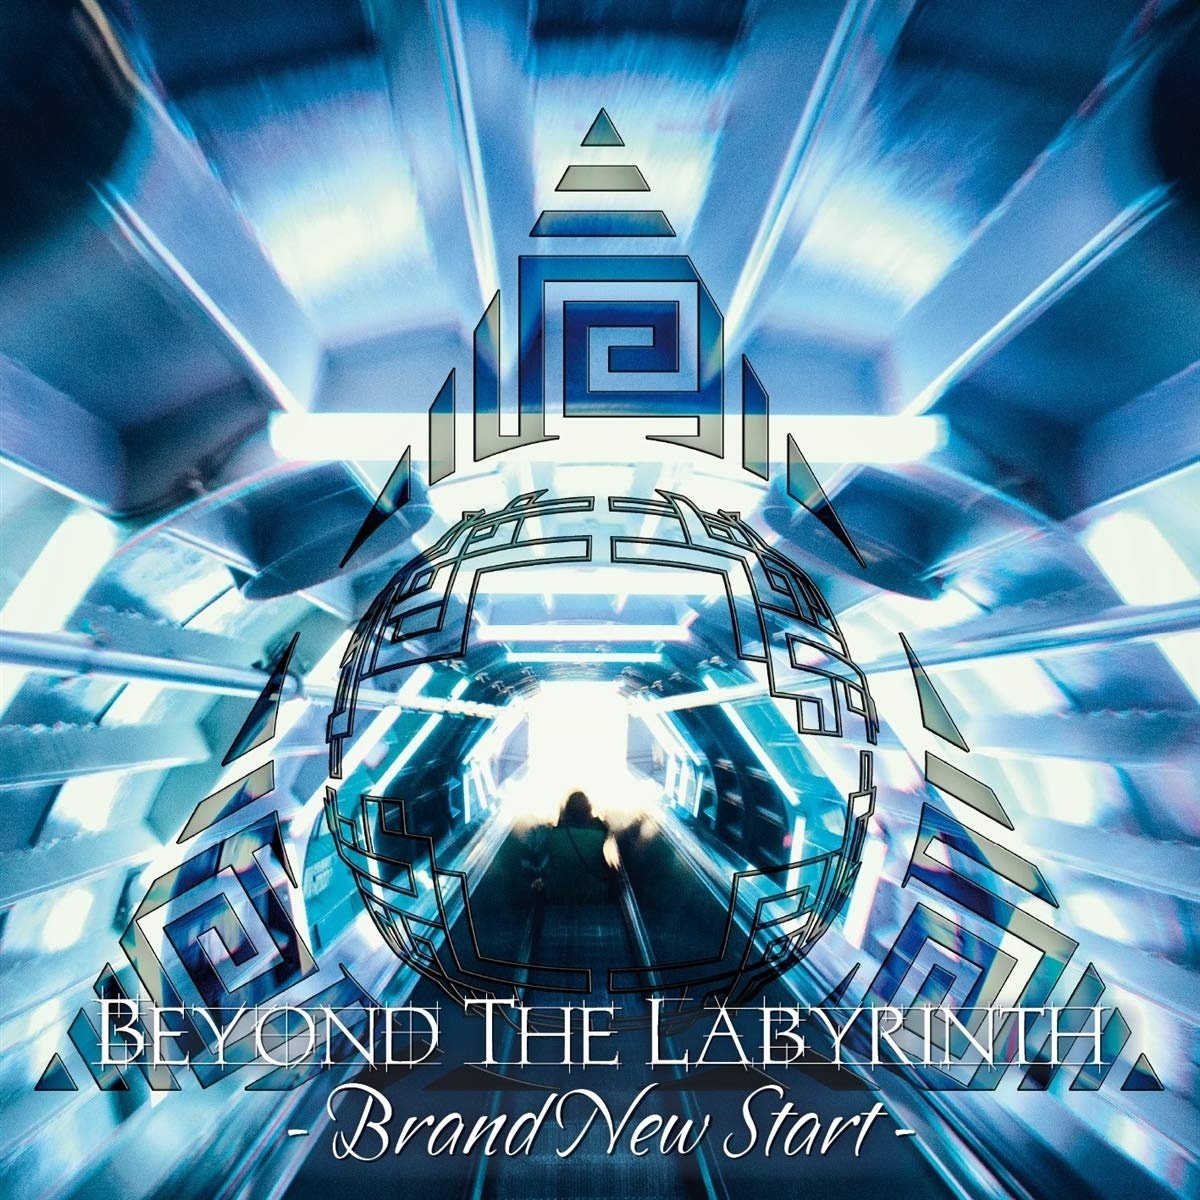 Starting cd. Beyond the Labyrinth. Beyond the Labyrinth рок группа Бельгия. Juno Reactor Labyrinth. Shining Beyond.